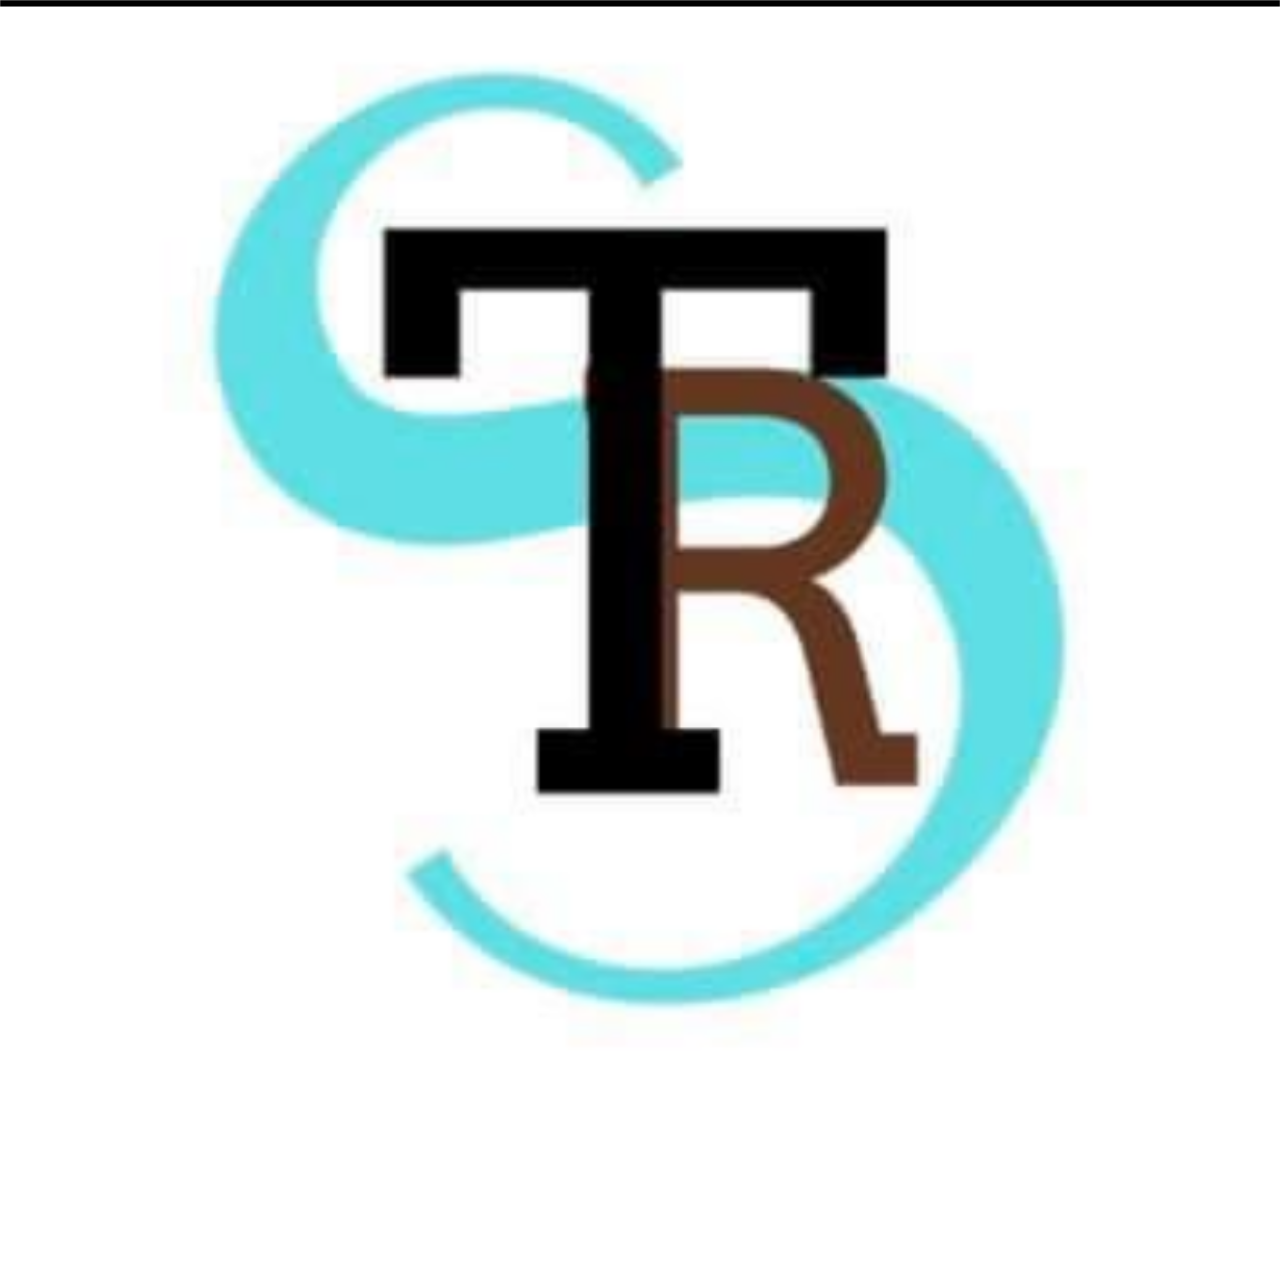 TWIN SPRINGS RANCH's logo